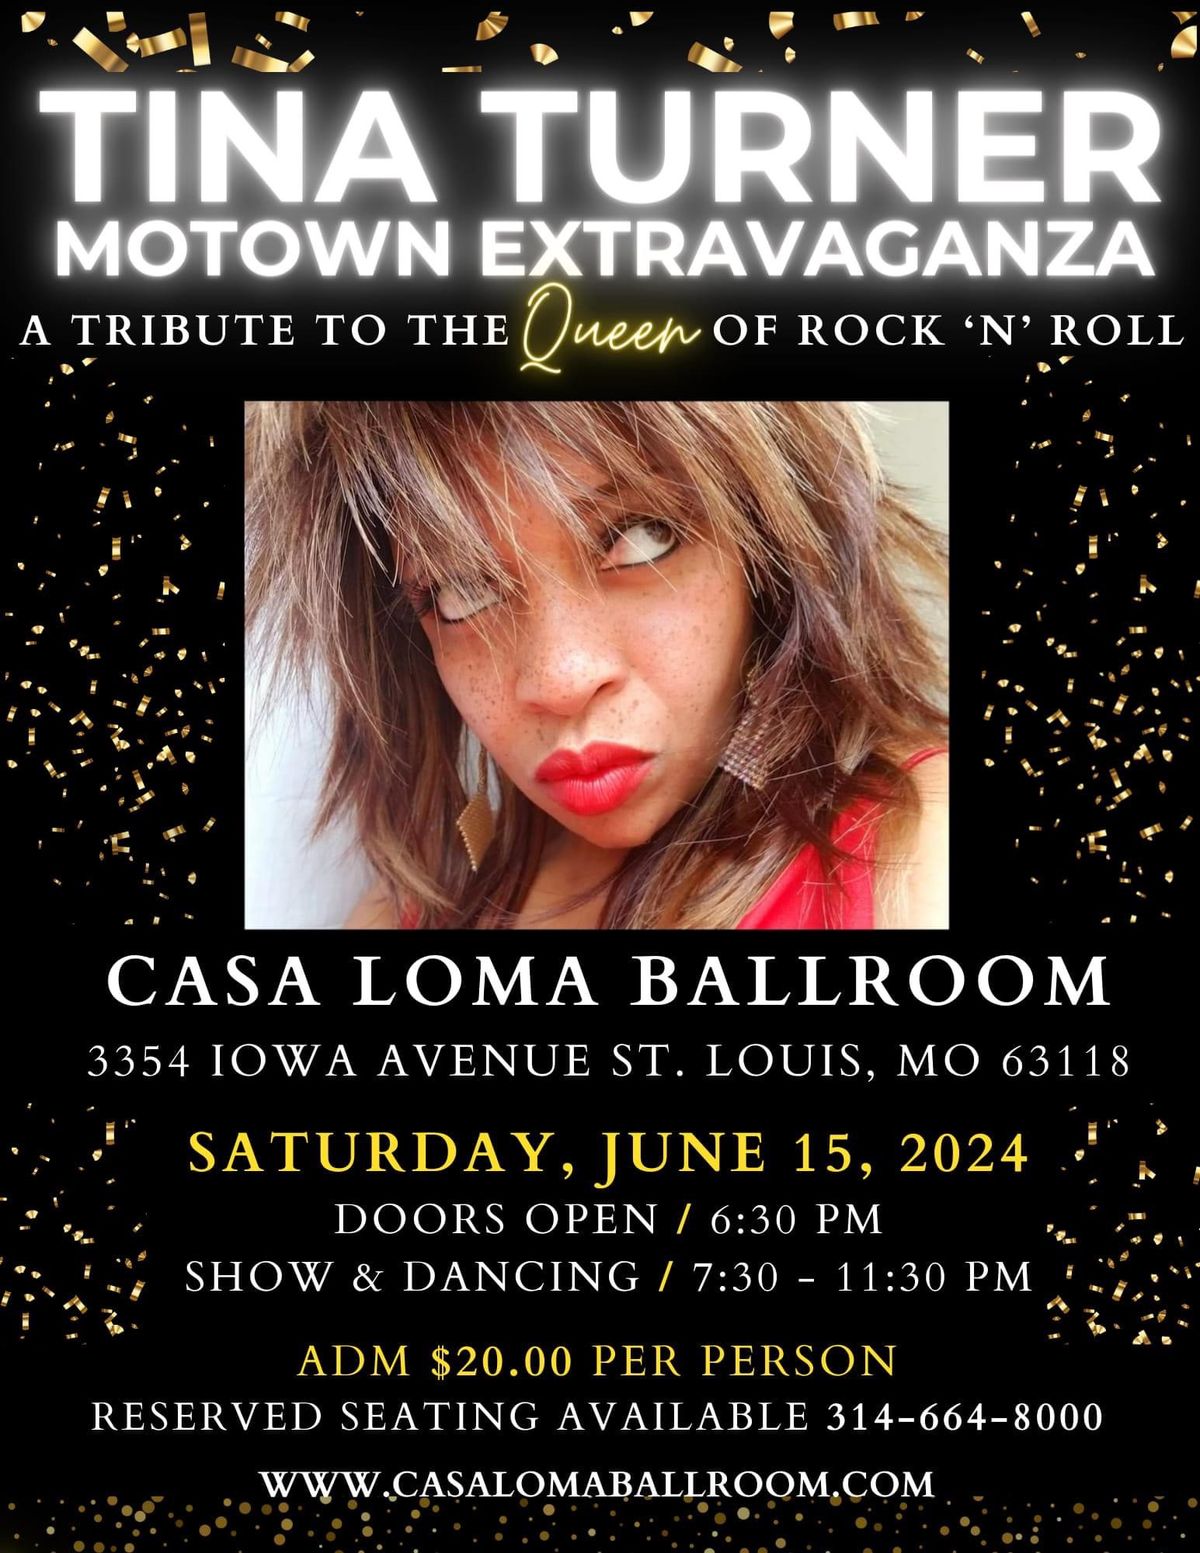 Tina Turner Motown Extravaganza 